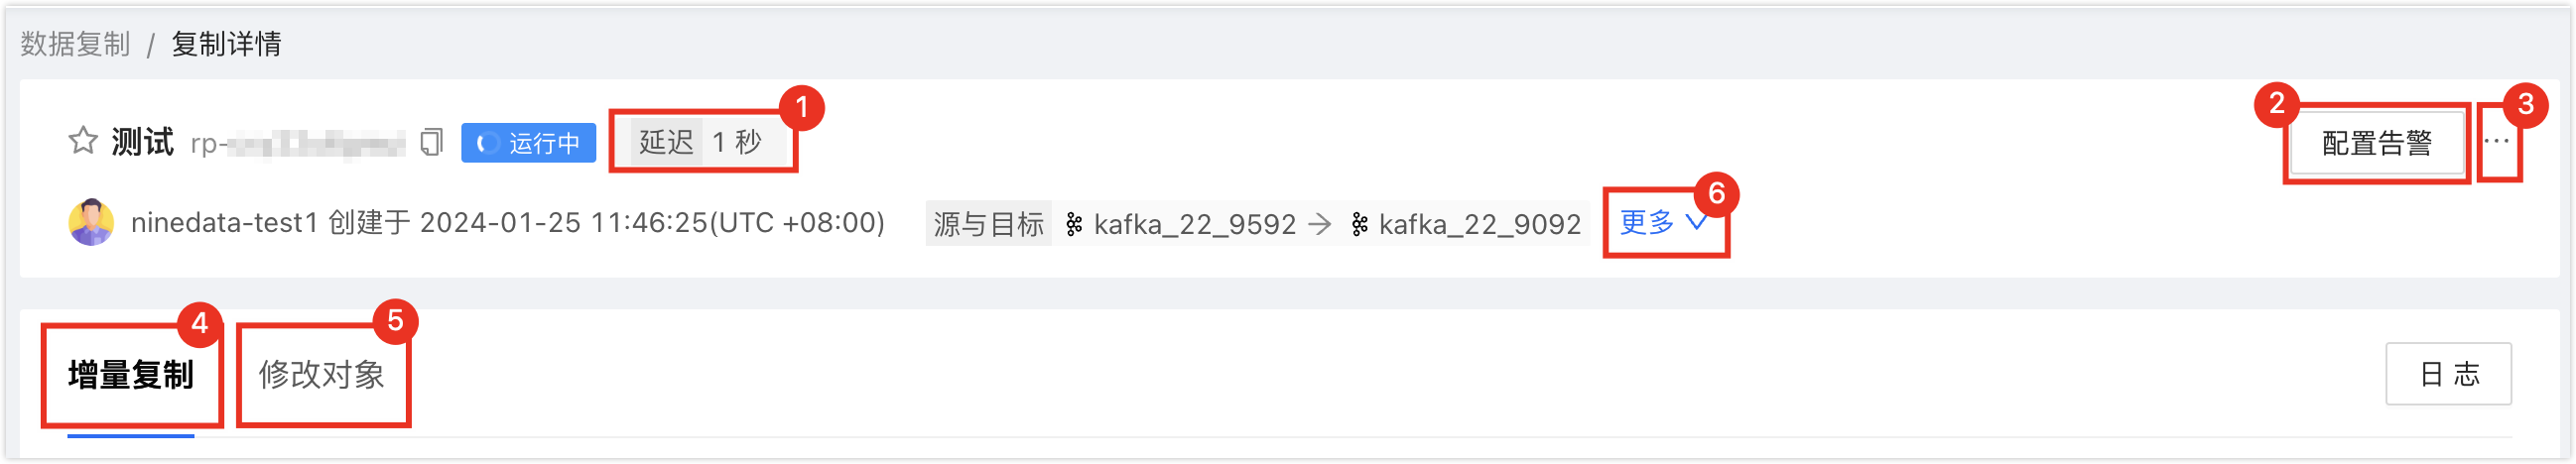 kafka2ck_result